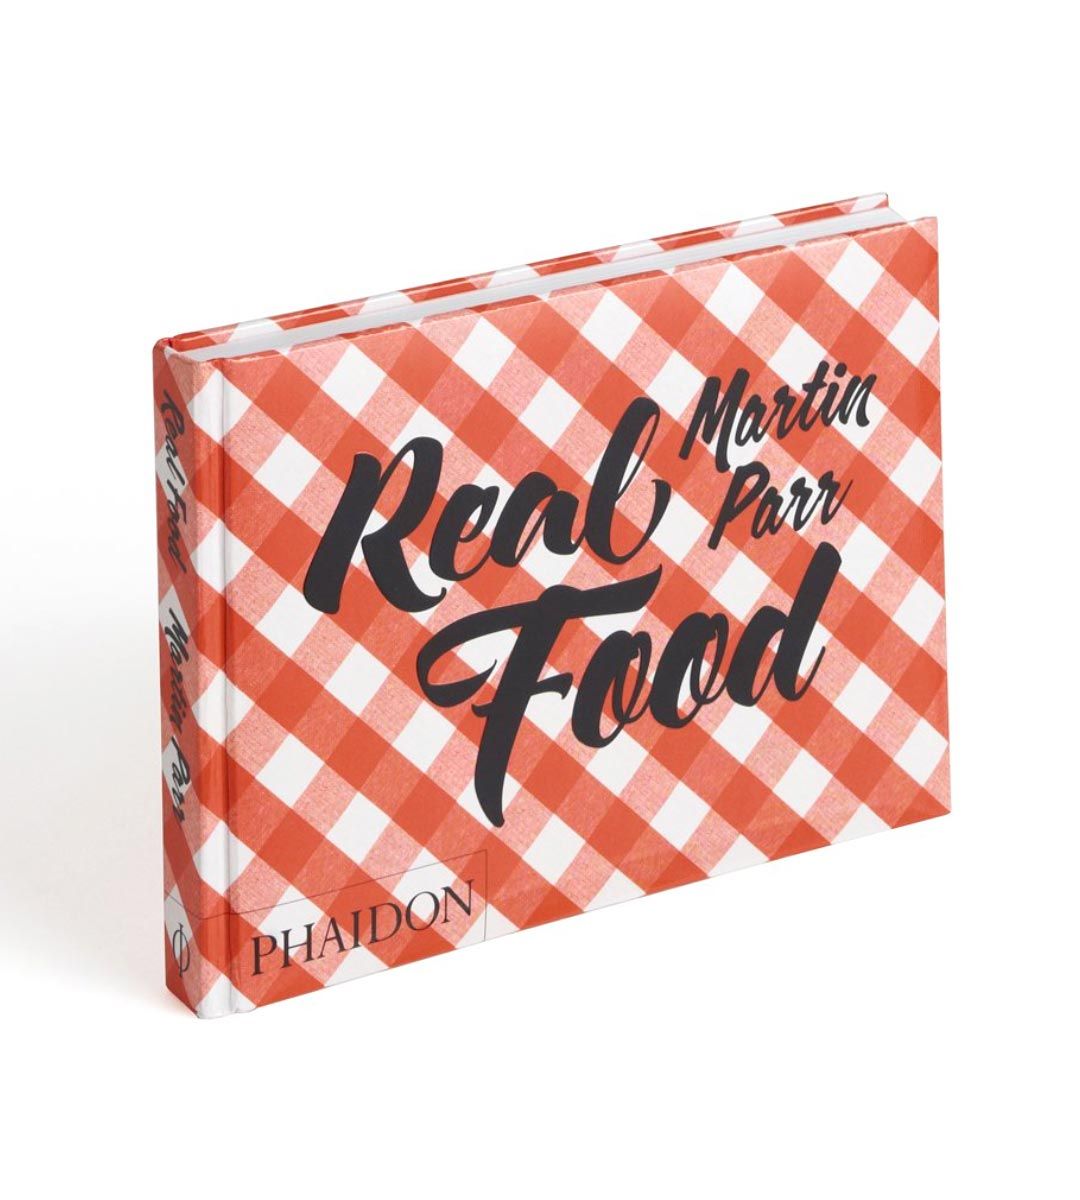 Real Food - Martin Parr